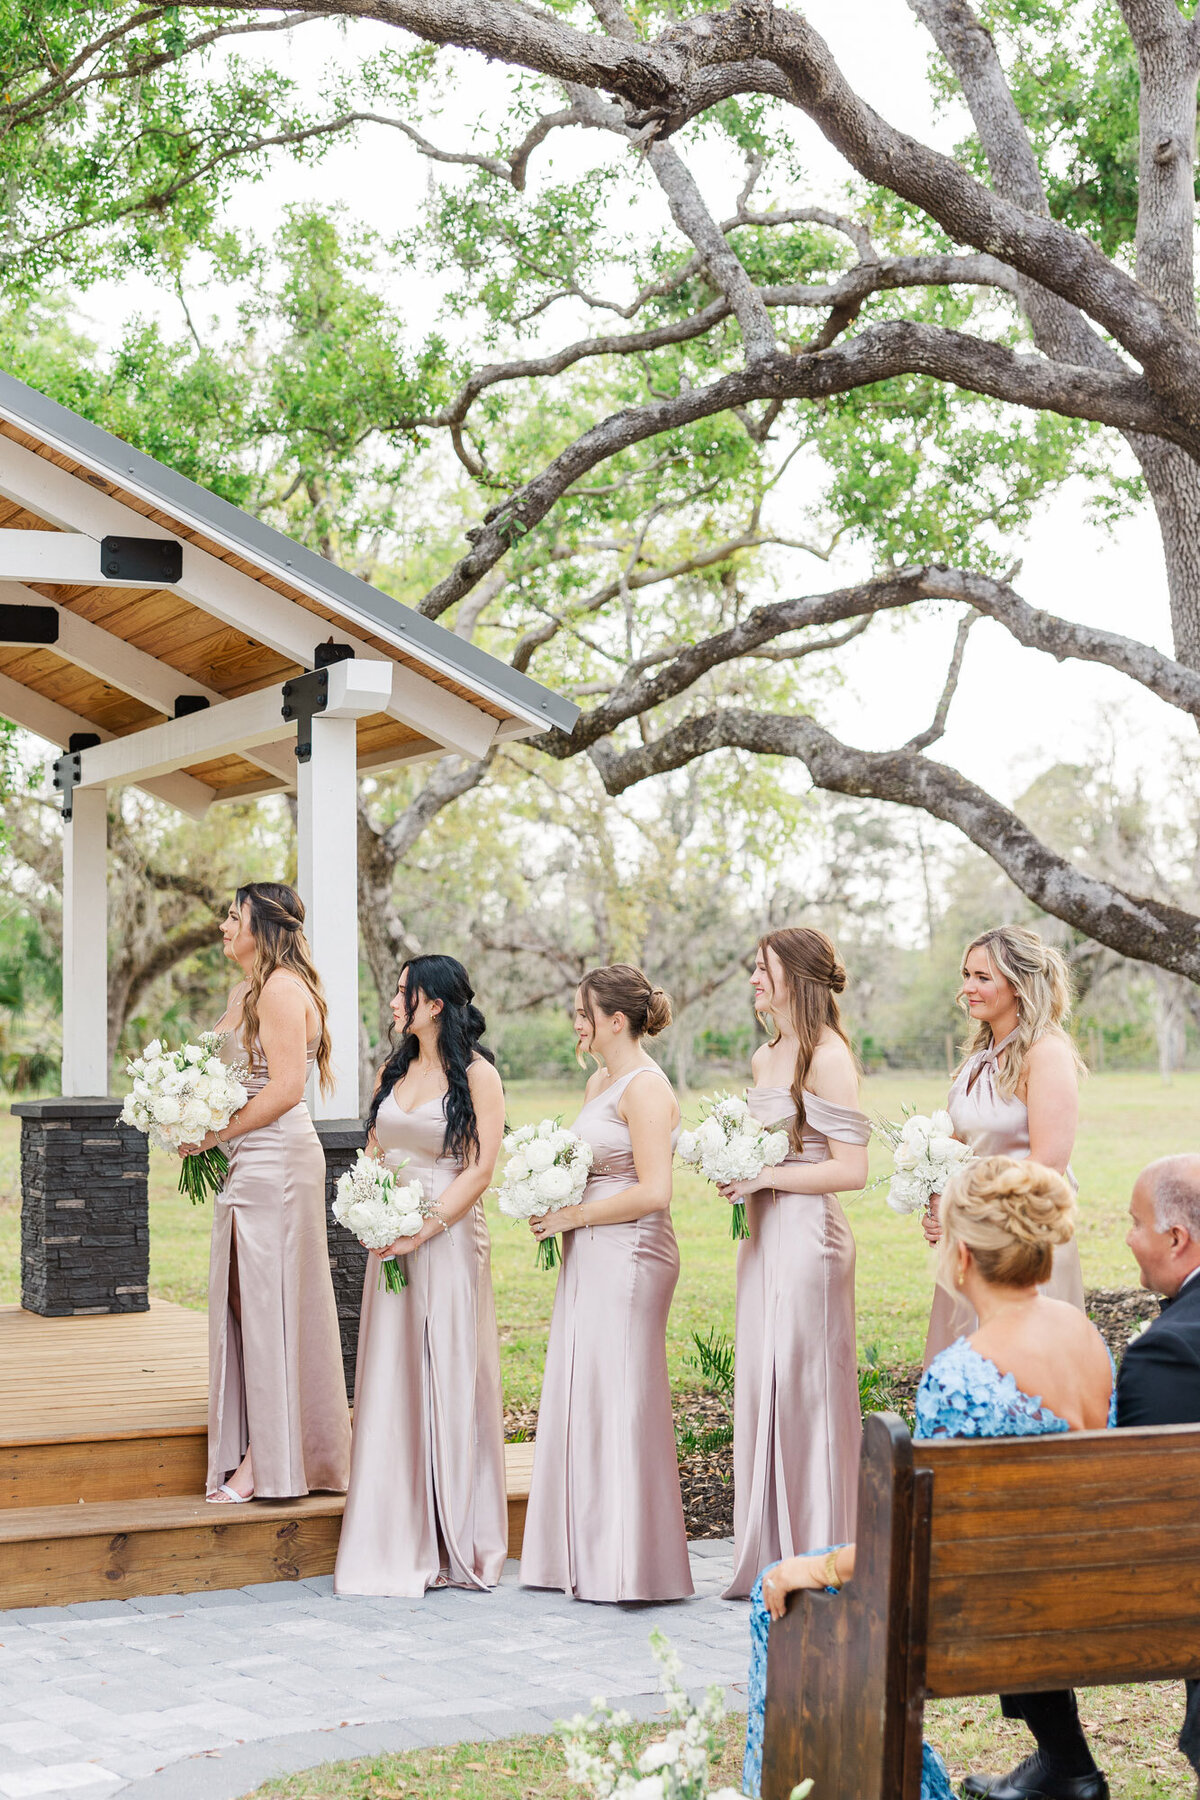 Chloe & Emerson - South Florida Wedding - Deanna Grace Photography -24